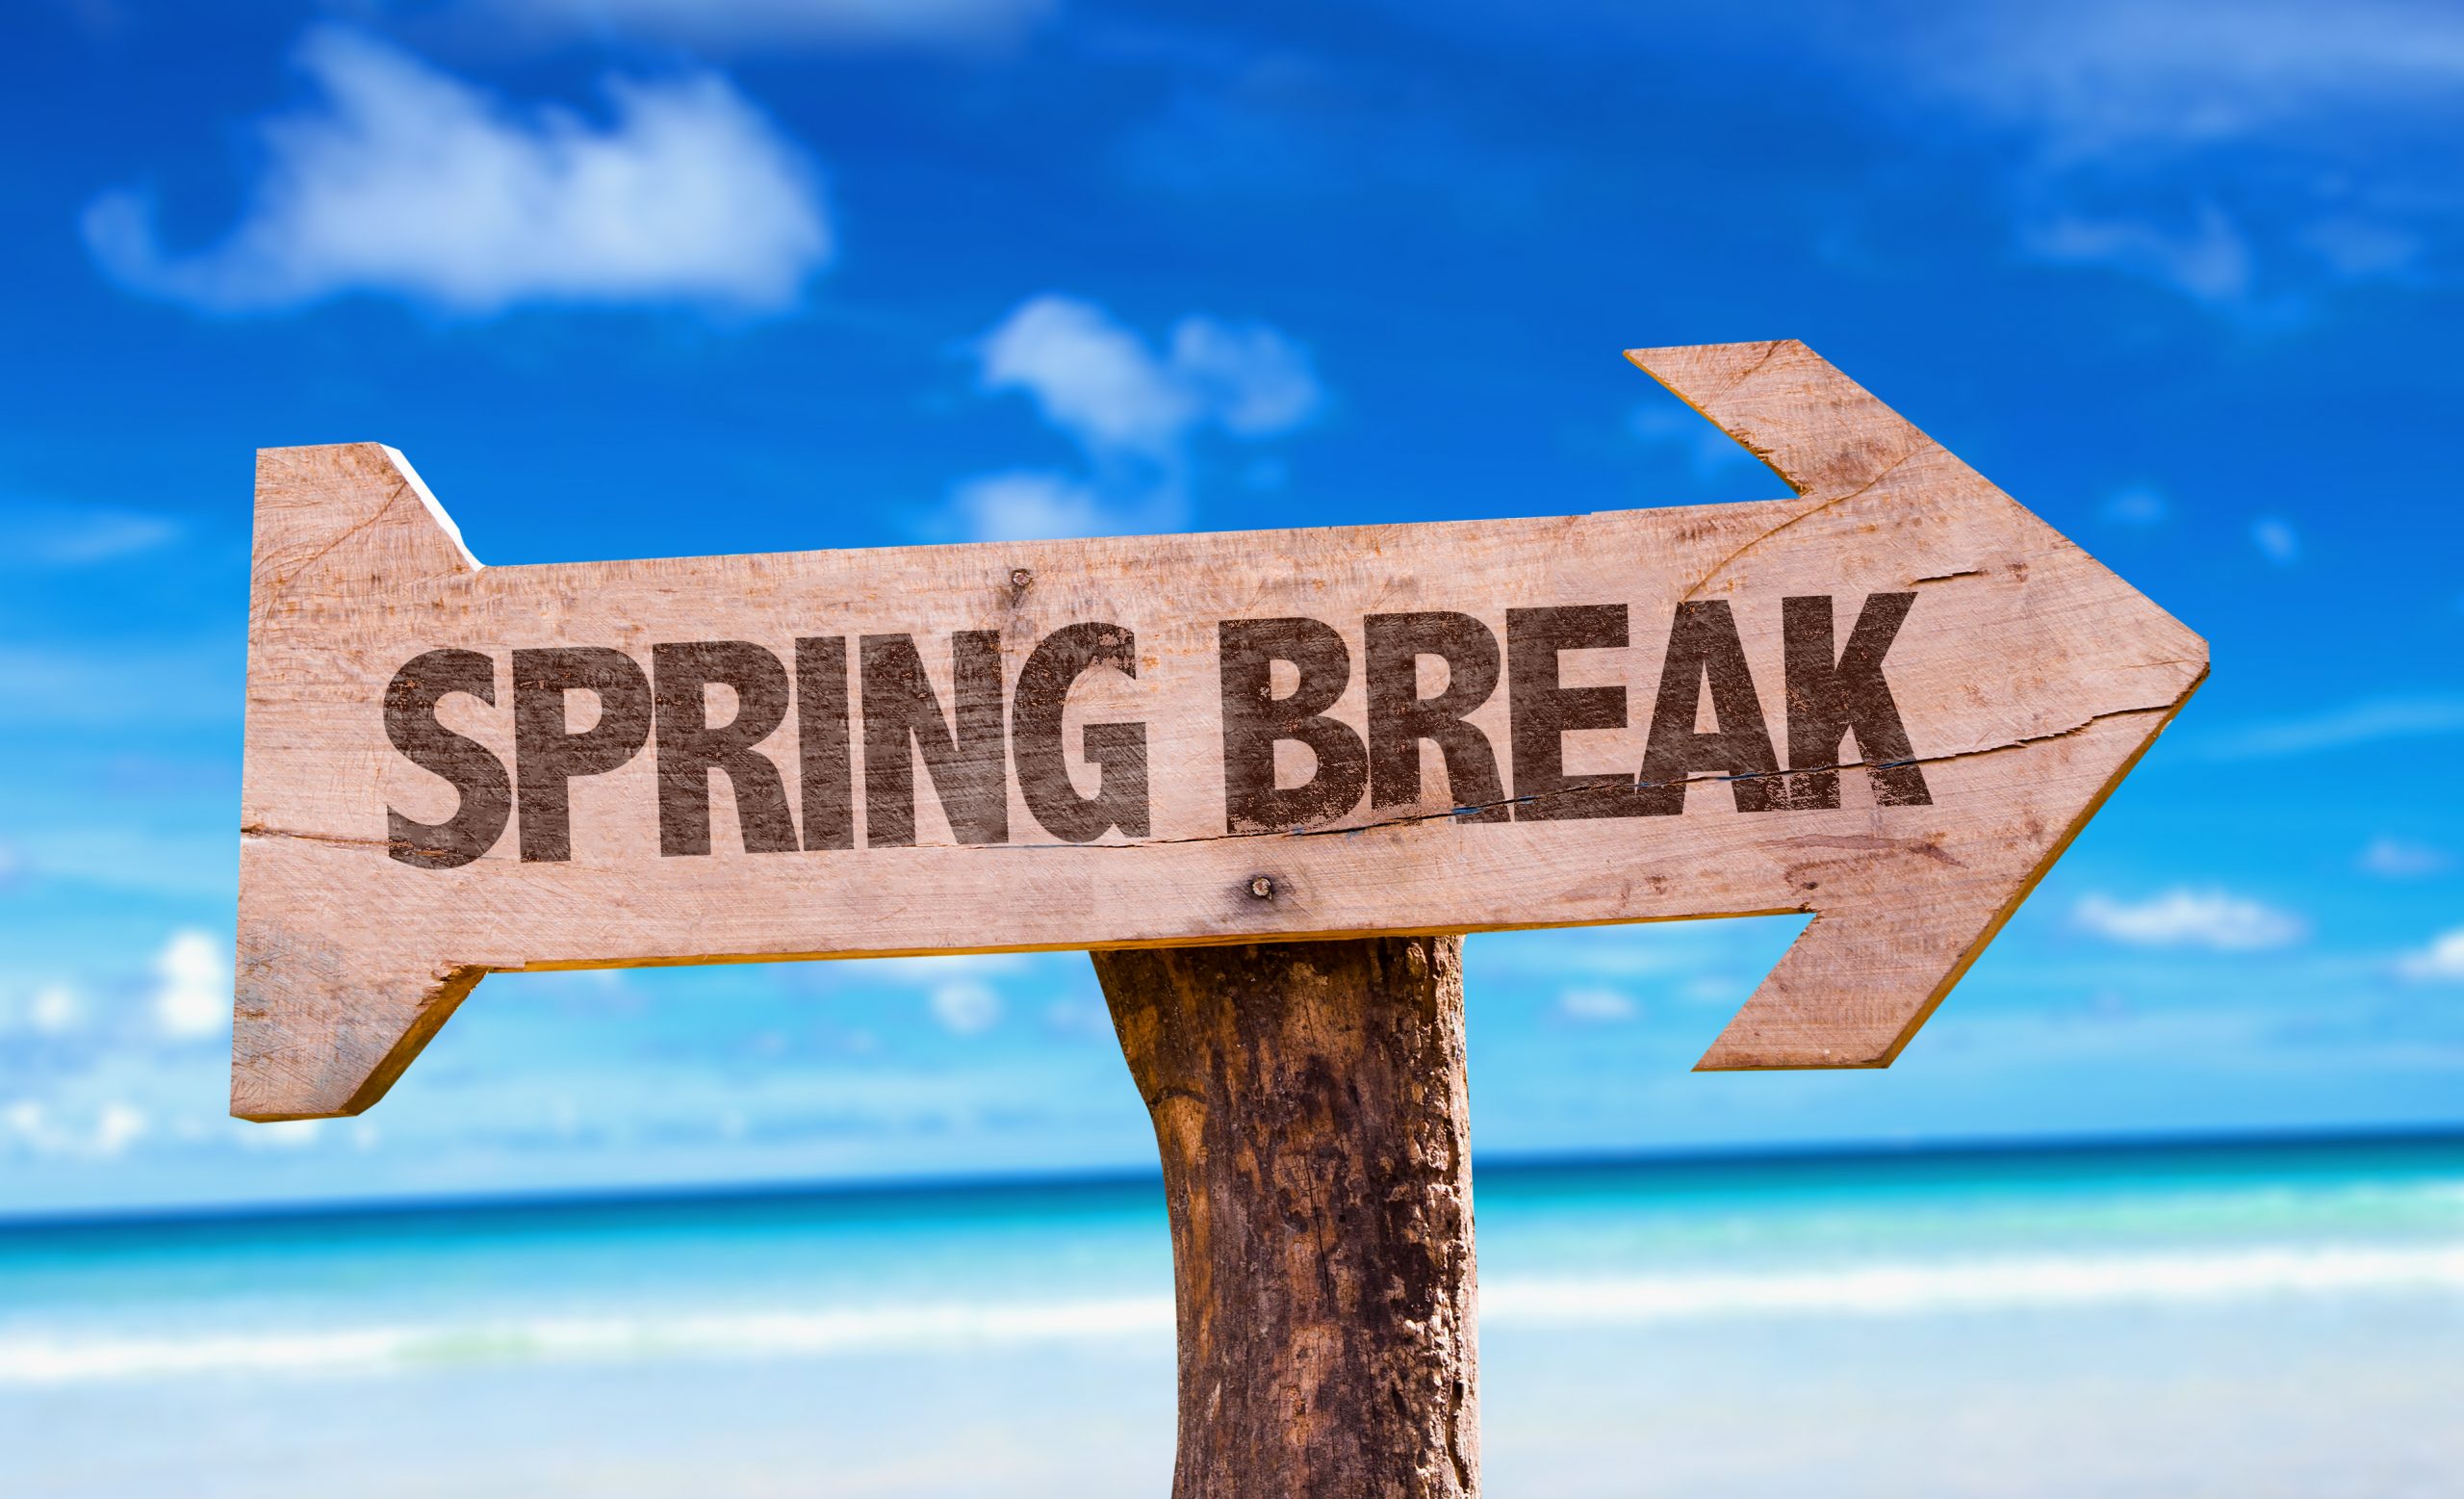 Spring Break sign on a beach